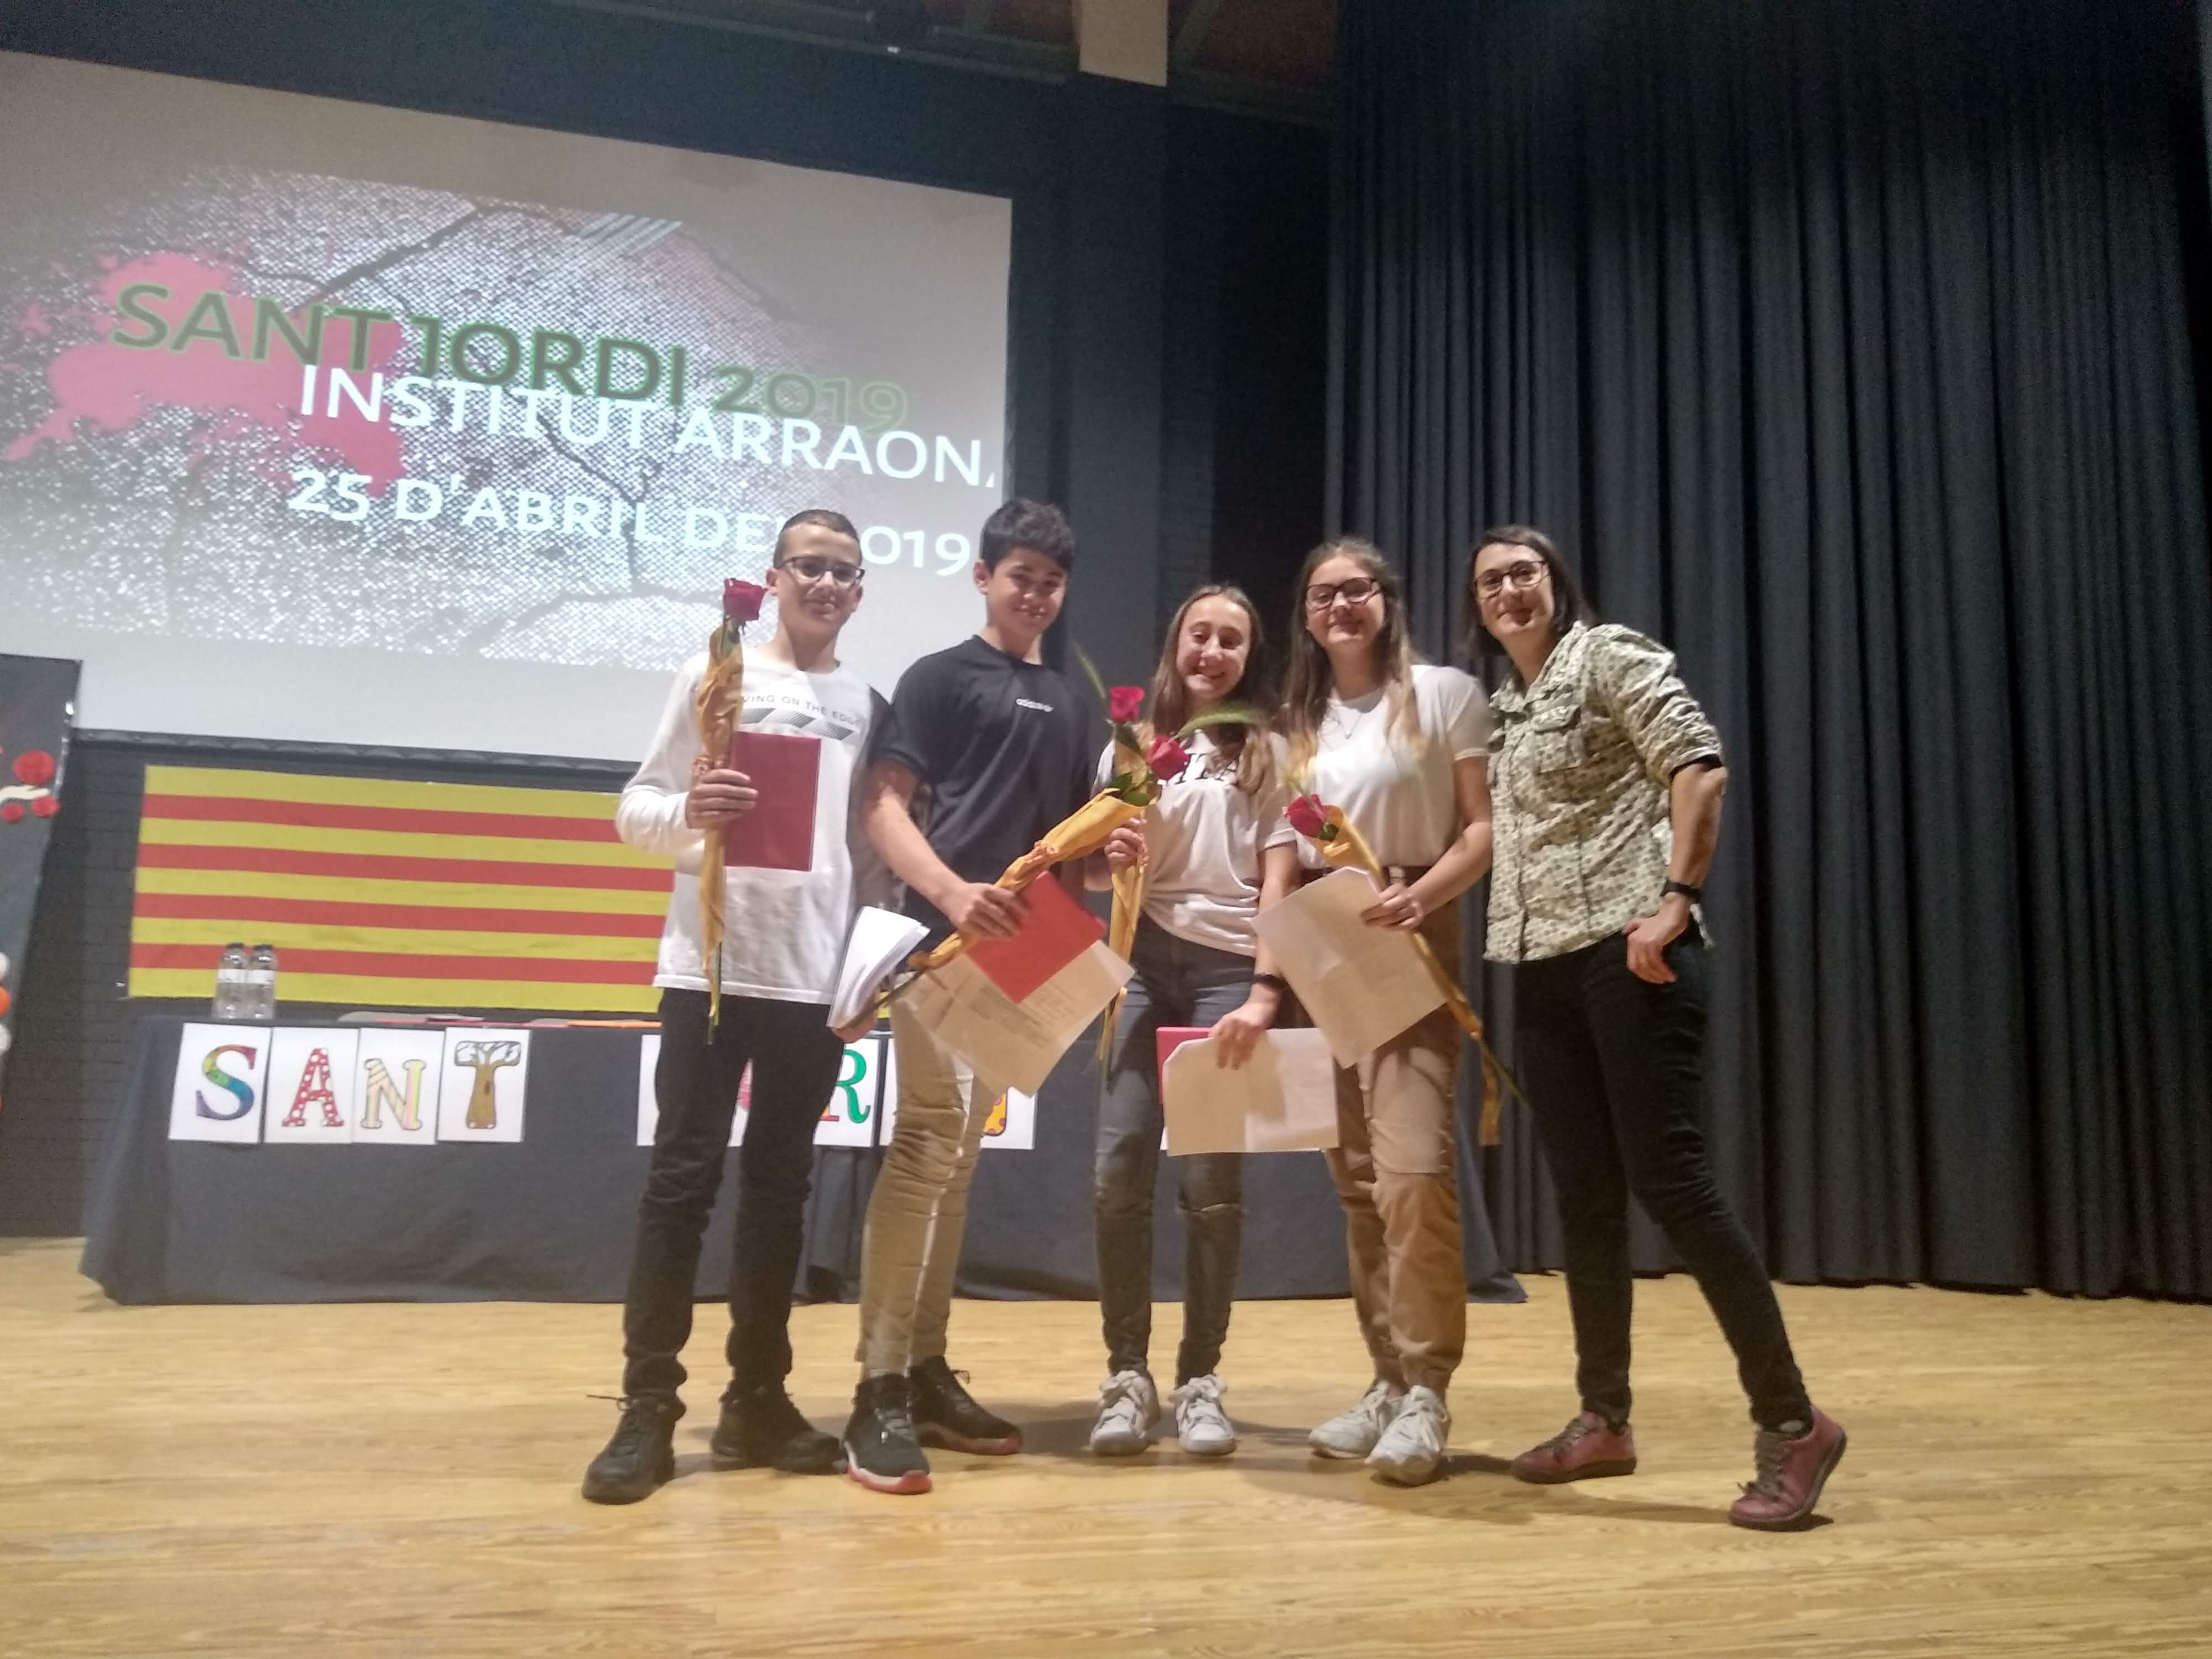 Sant Jordi 2019 (9)